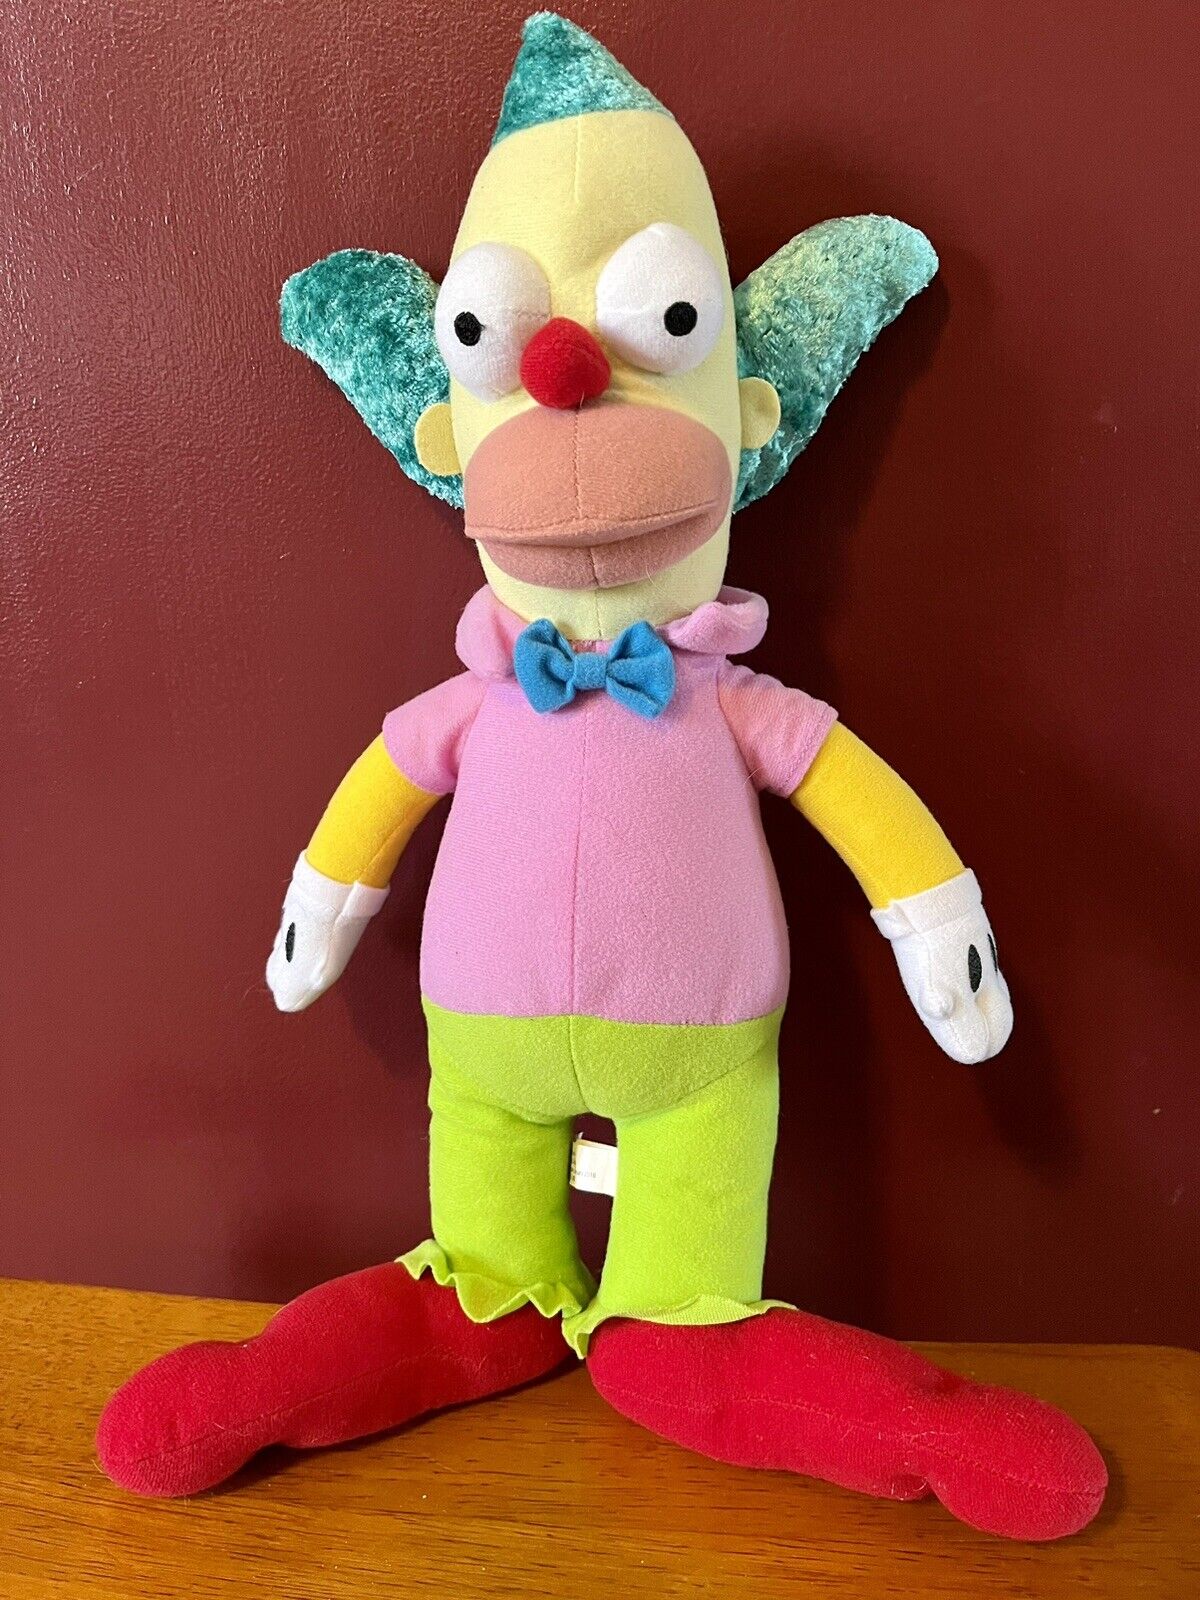 The Simpsons Krusty the Clown Stuffed Toy Plush 15”